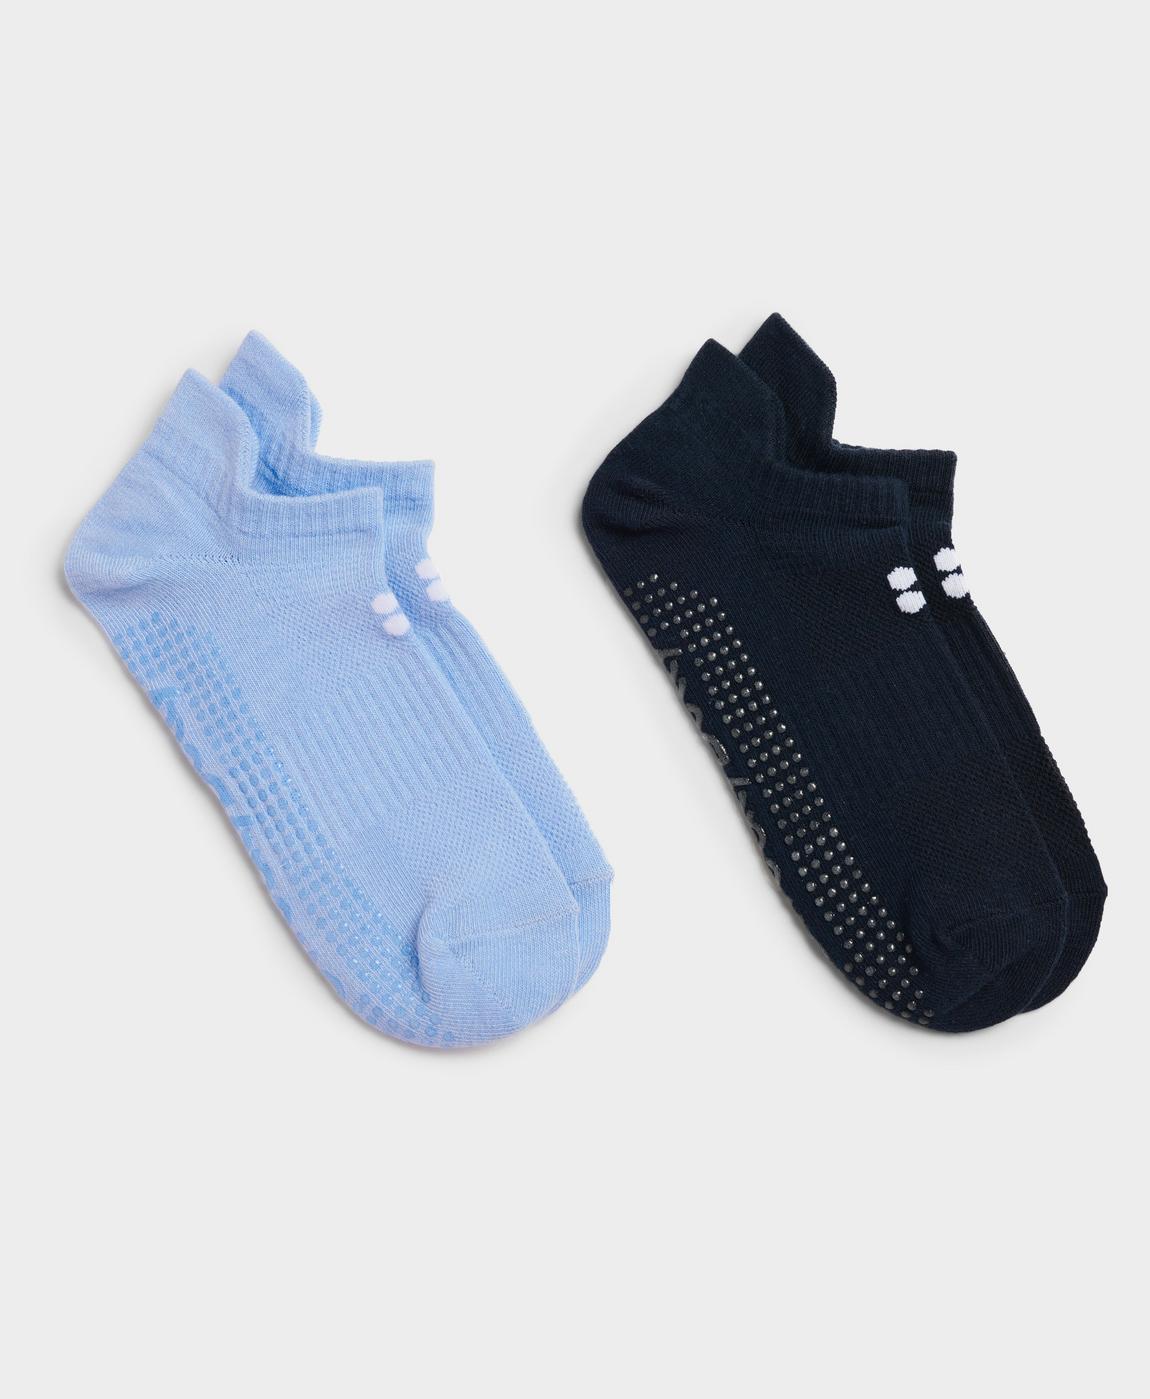 Barre Gripper Socks 2 Pack - Breeze Blue